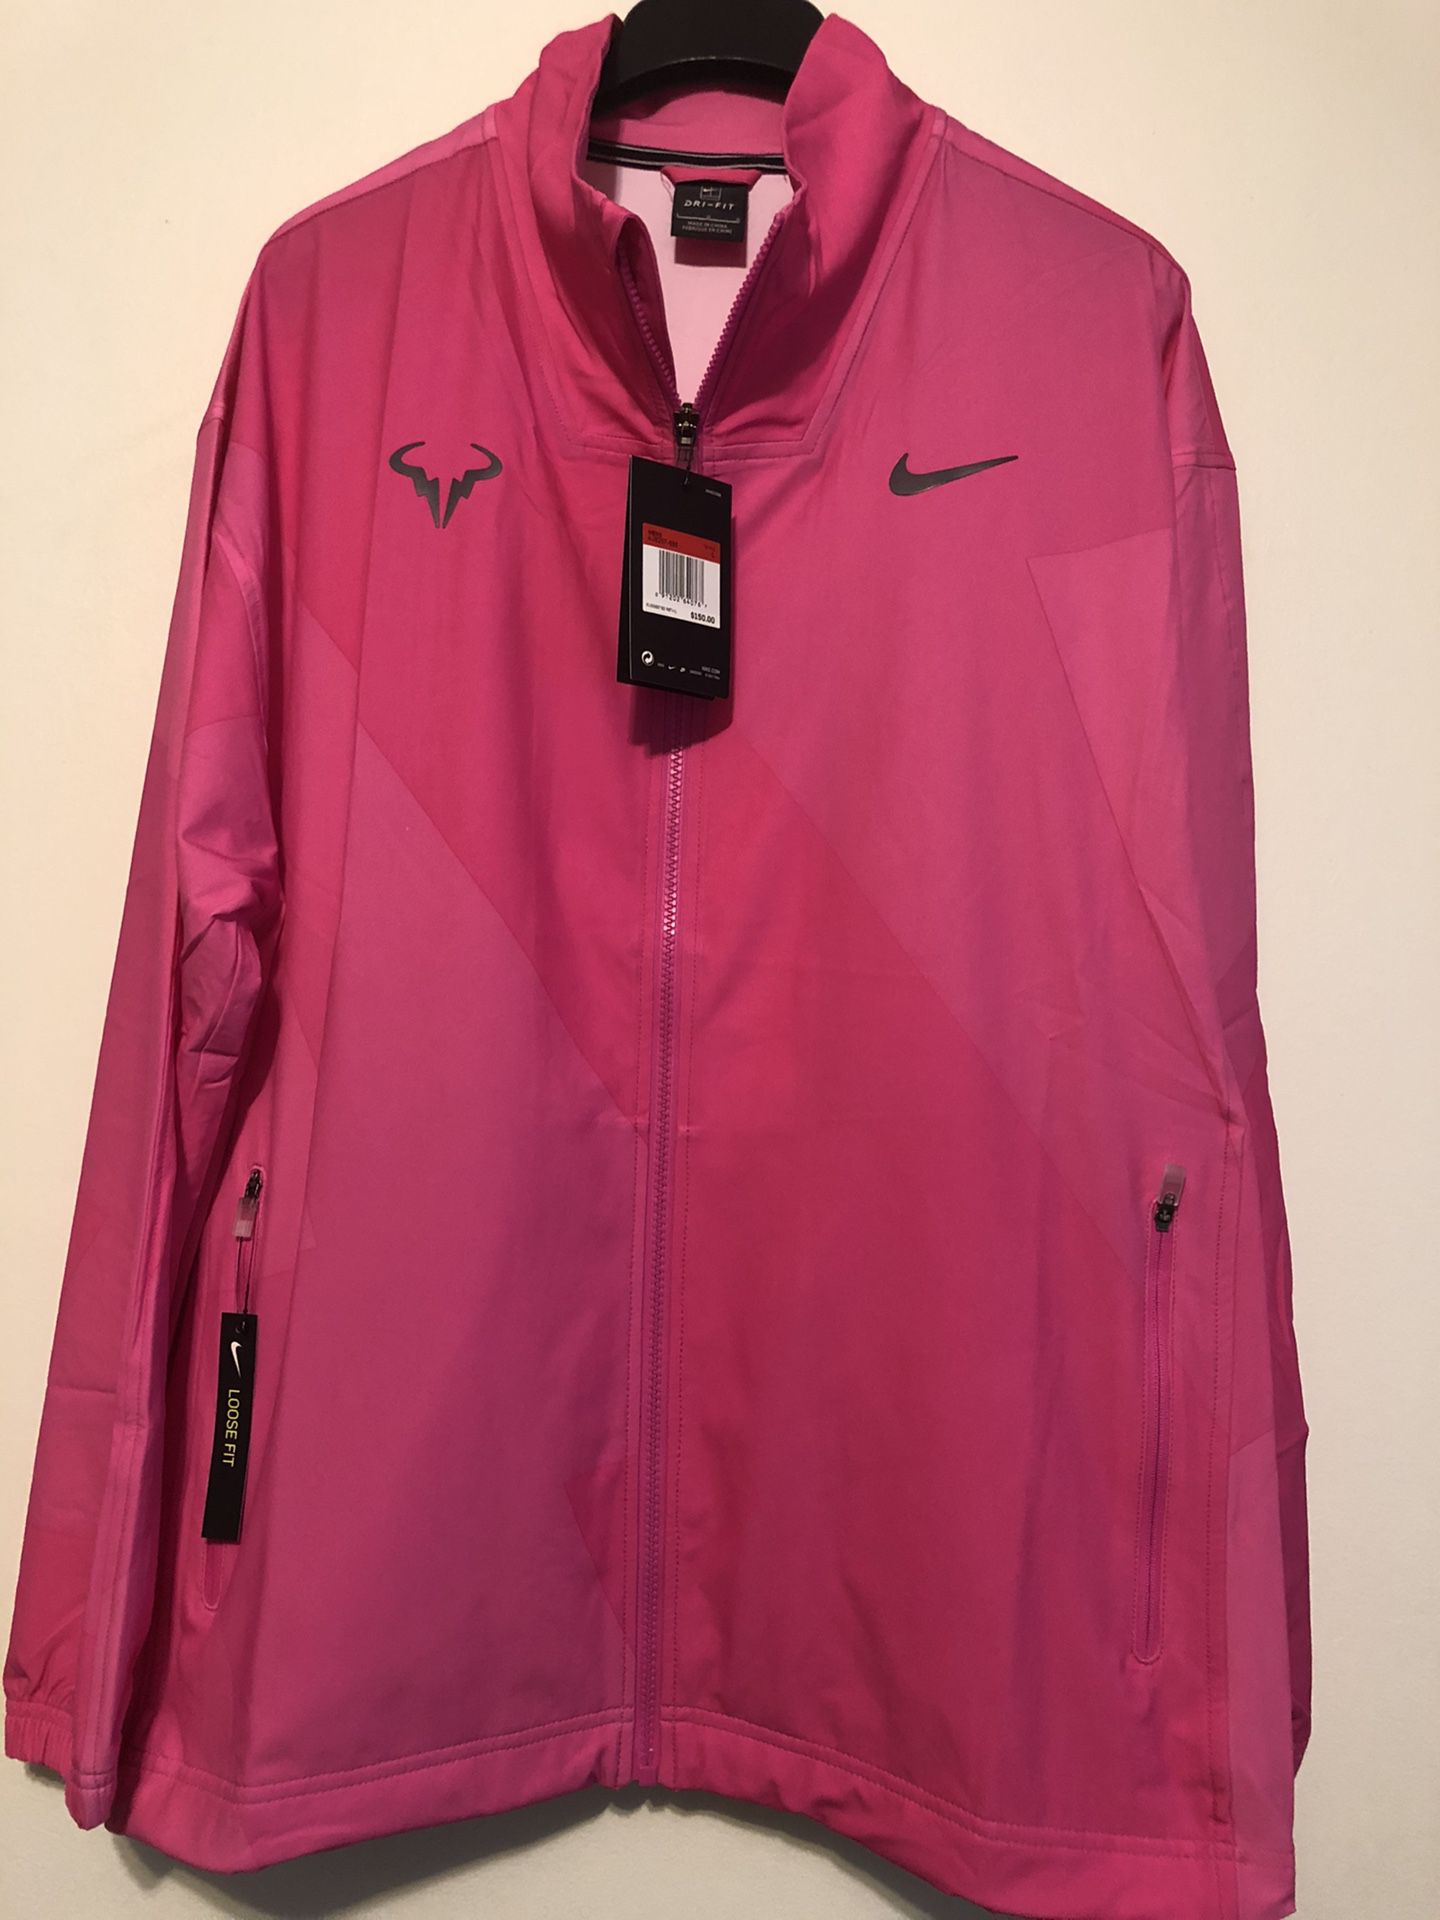 Nike Court Rafa Full Zip Jacket Men's Pink Black Sz Large 2019 AJ8257-686 NWT